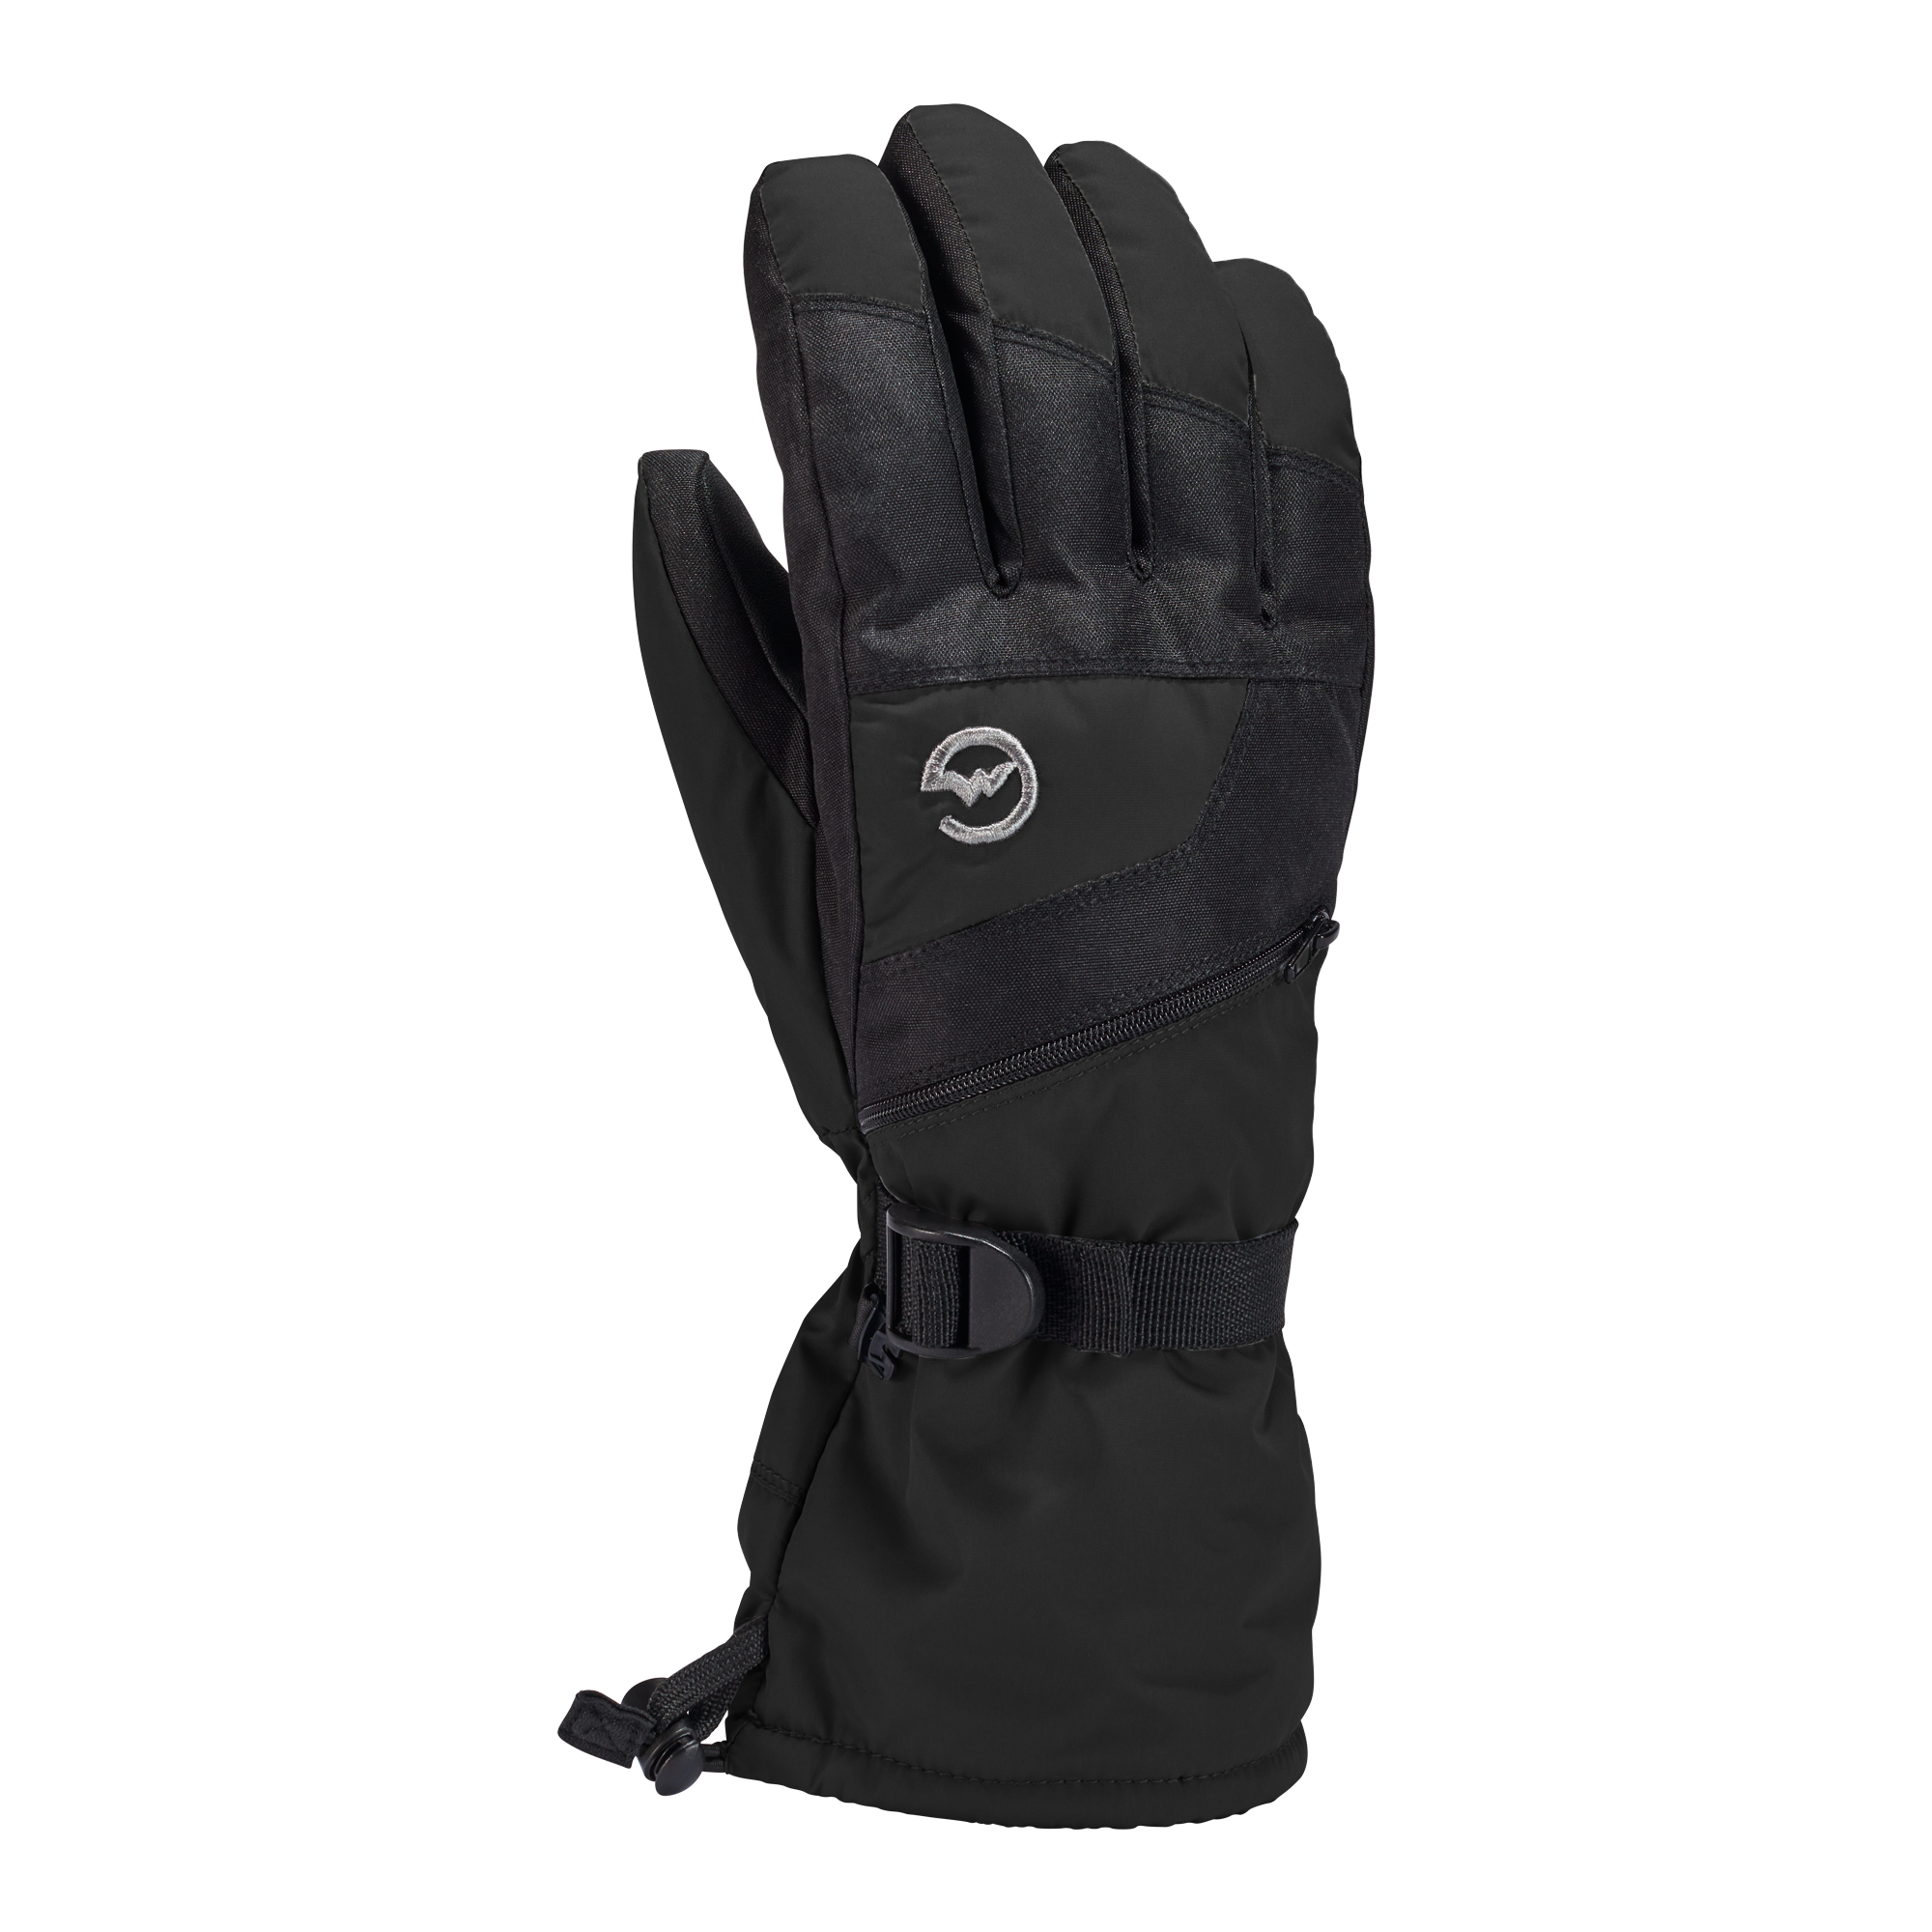 Gordini Gore Gauntlet Men's Glove - Black